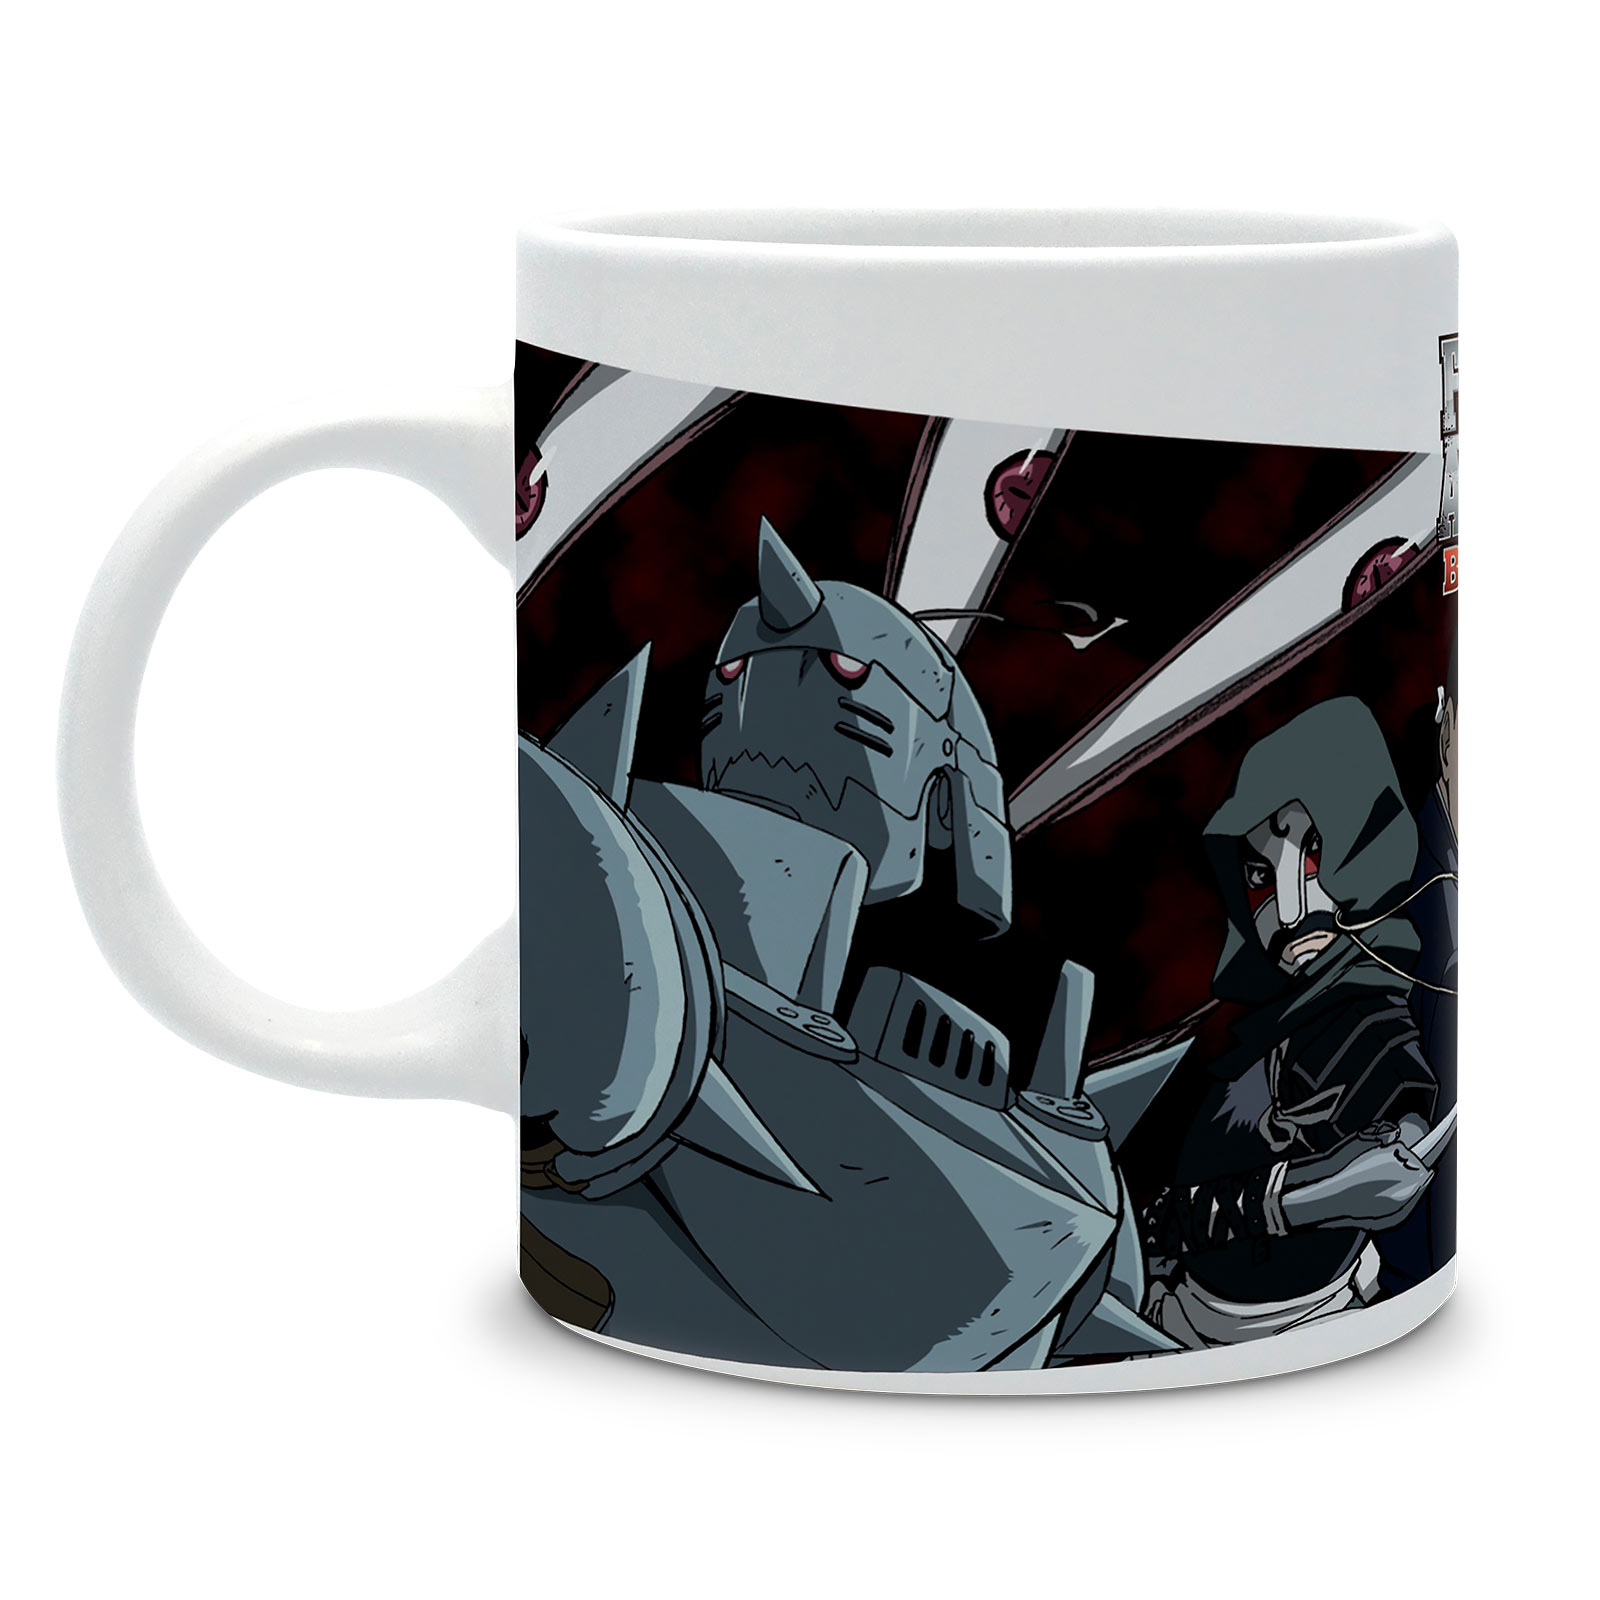 Fullmetal Alchemist - Heroes & Pride Mug